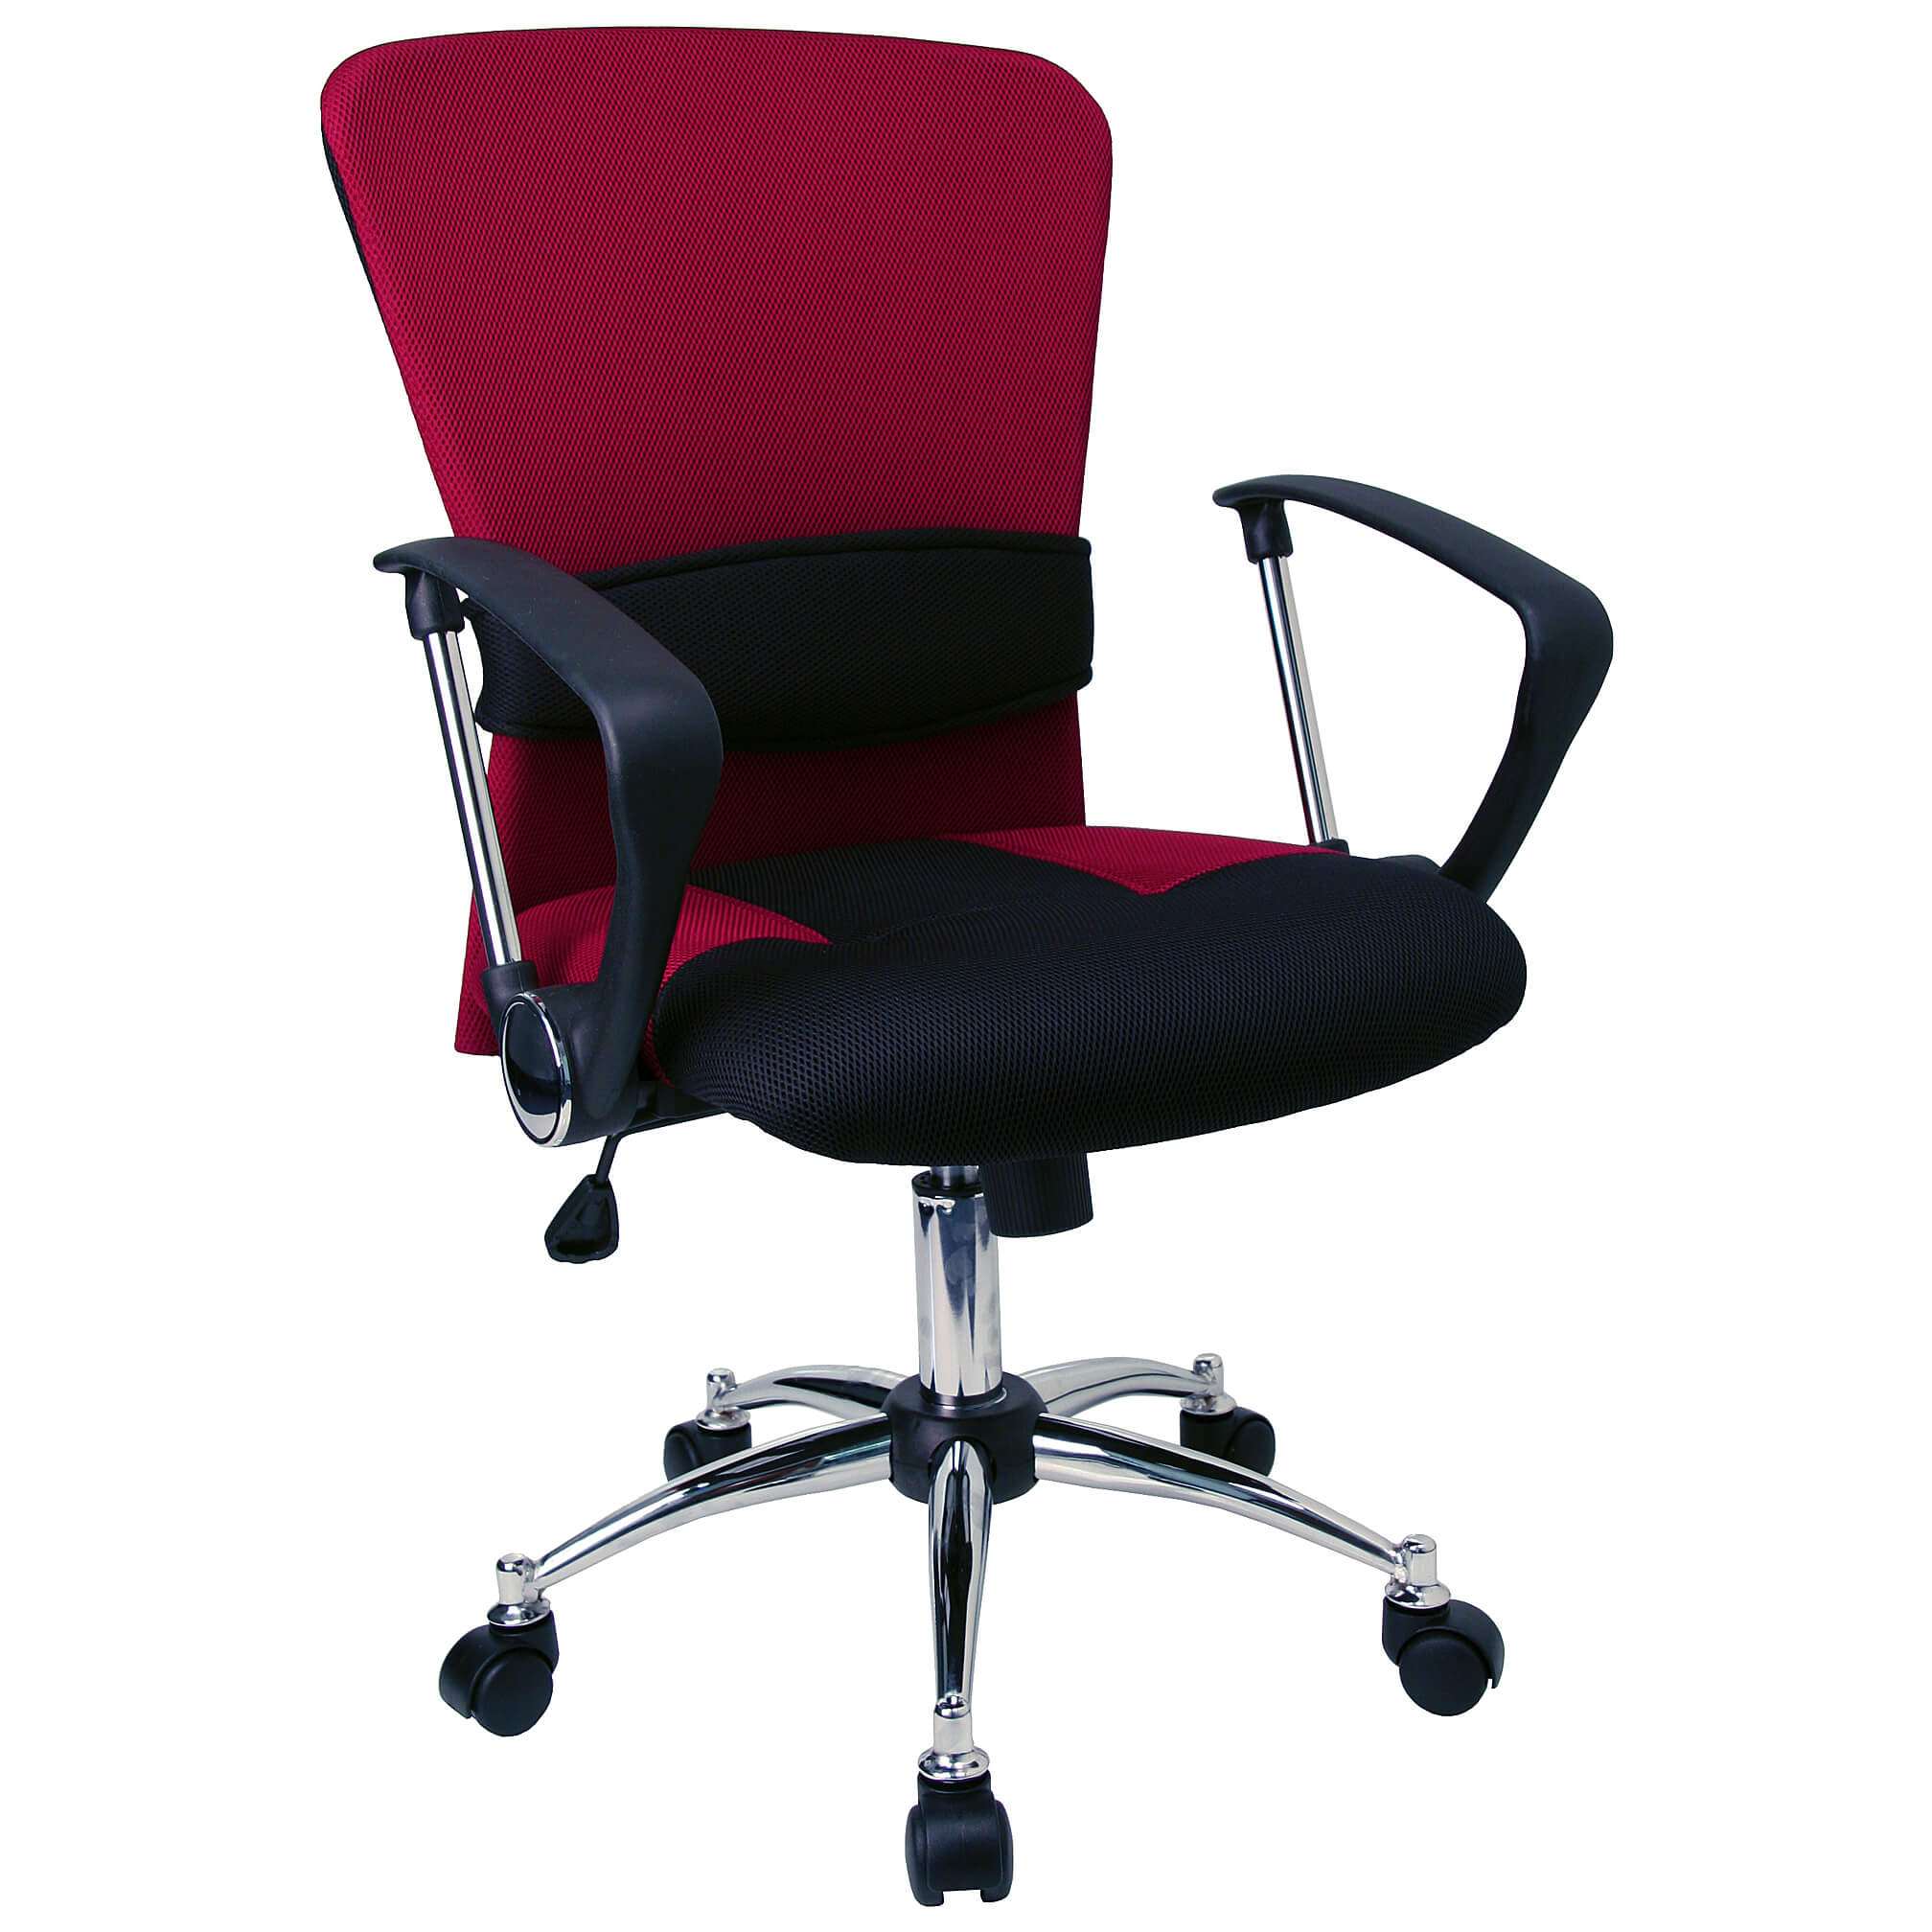 Cool desk chairs CUB LF W23 RED GG FLA